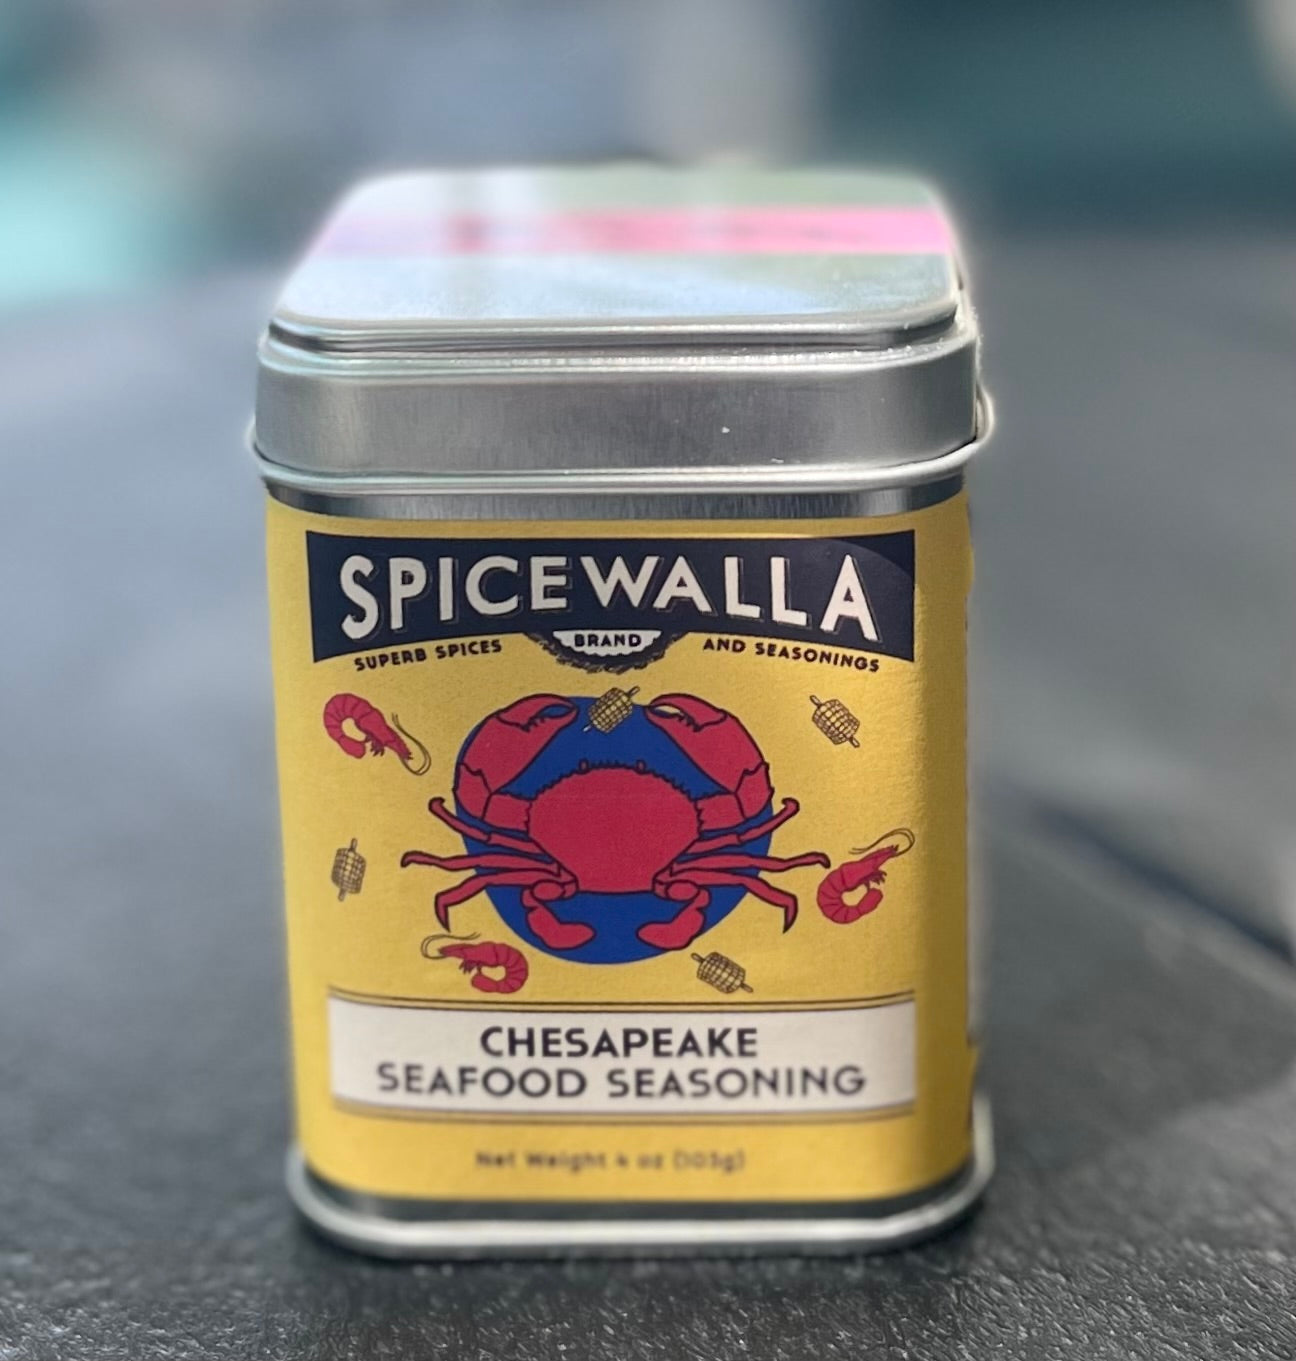 Spicewalla Chesapeake Seafood Seasoning